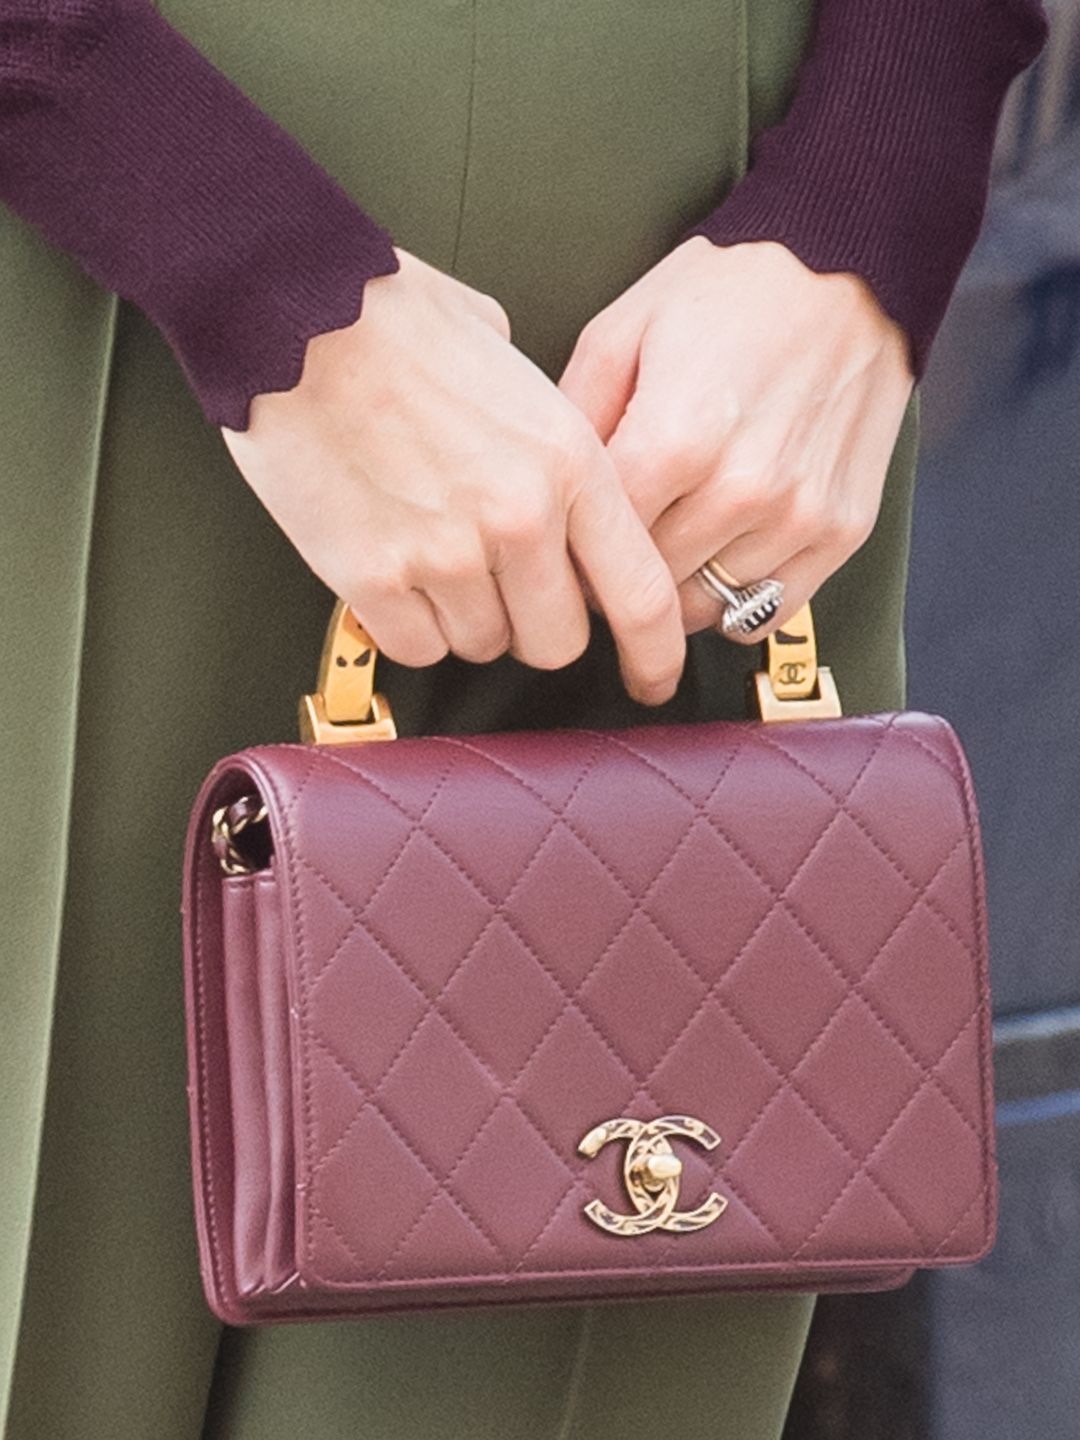 Chanel Mini Flap Bag in Black Lambskin - Kate Middleton Bags - Kate's Closet